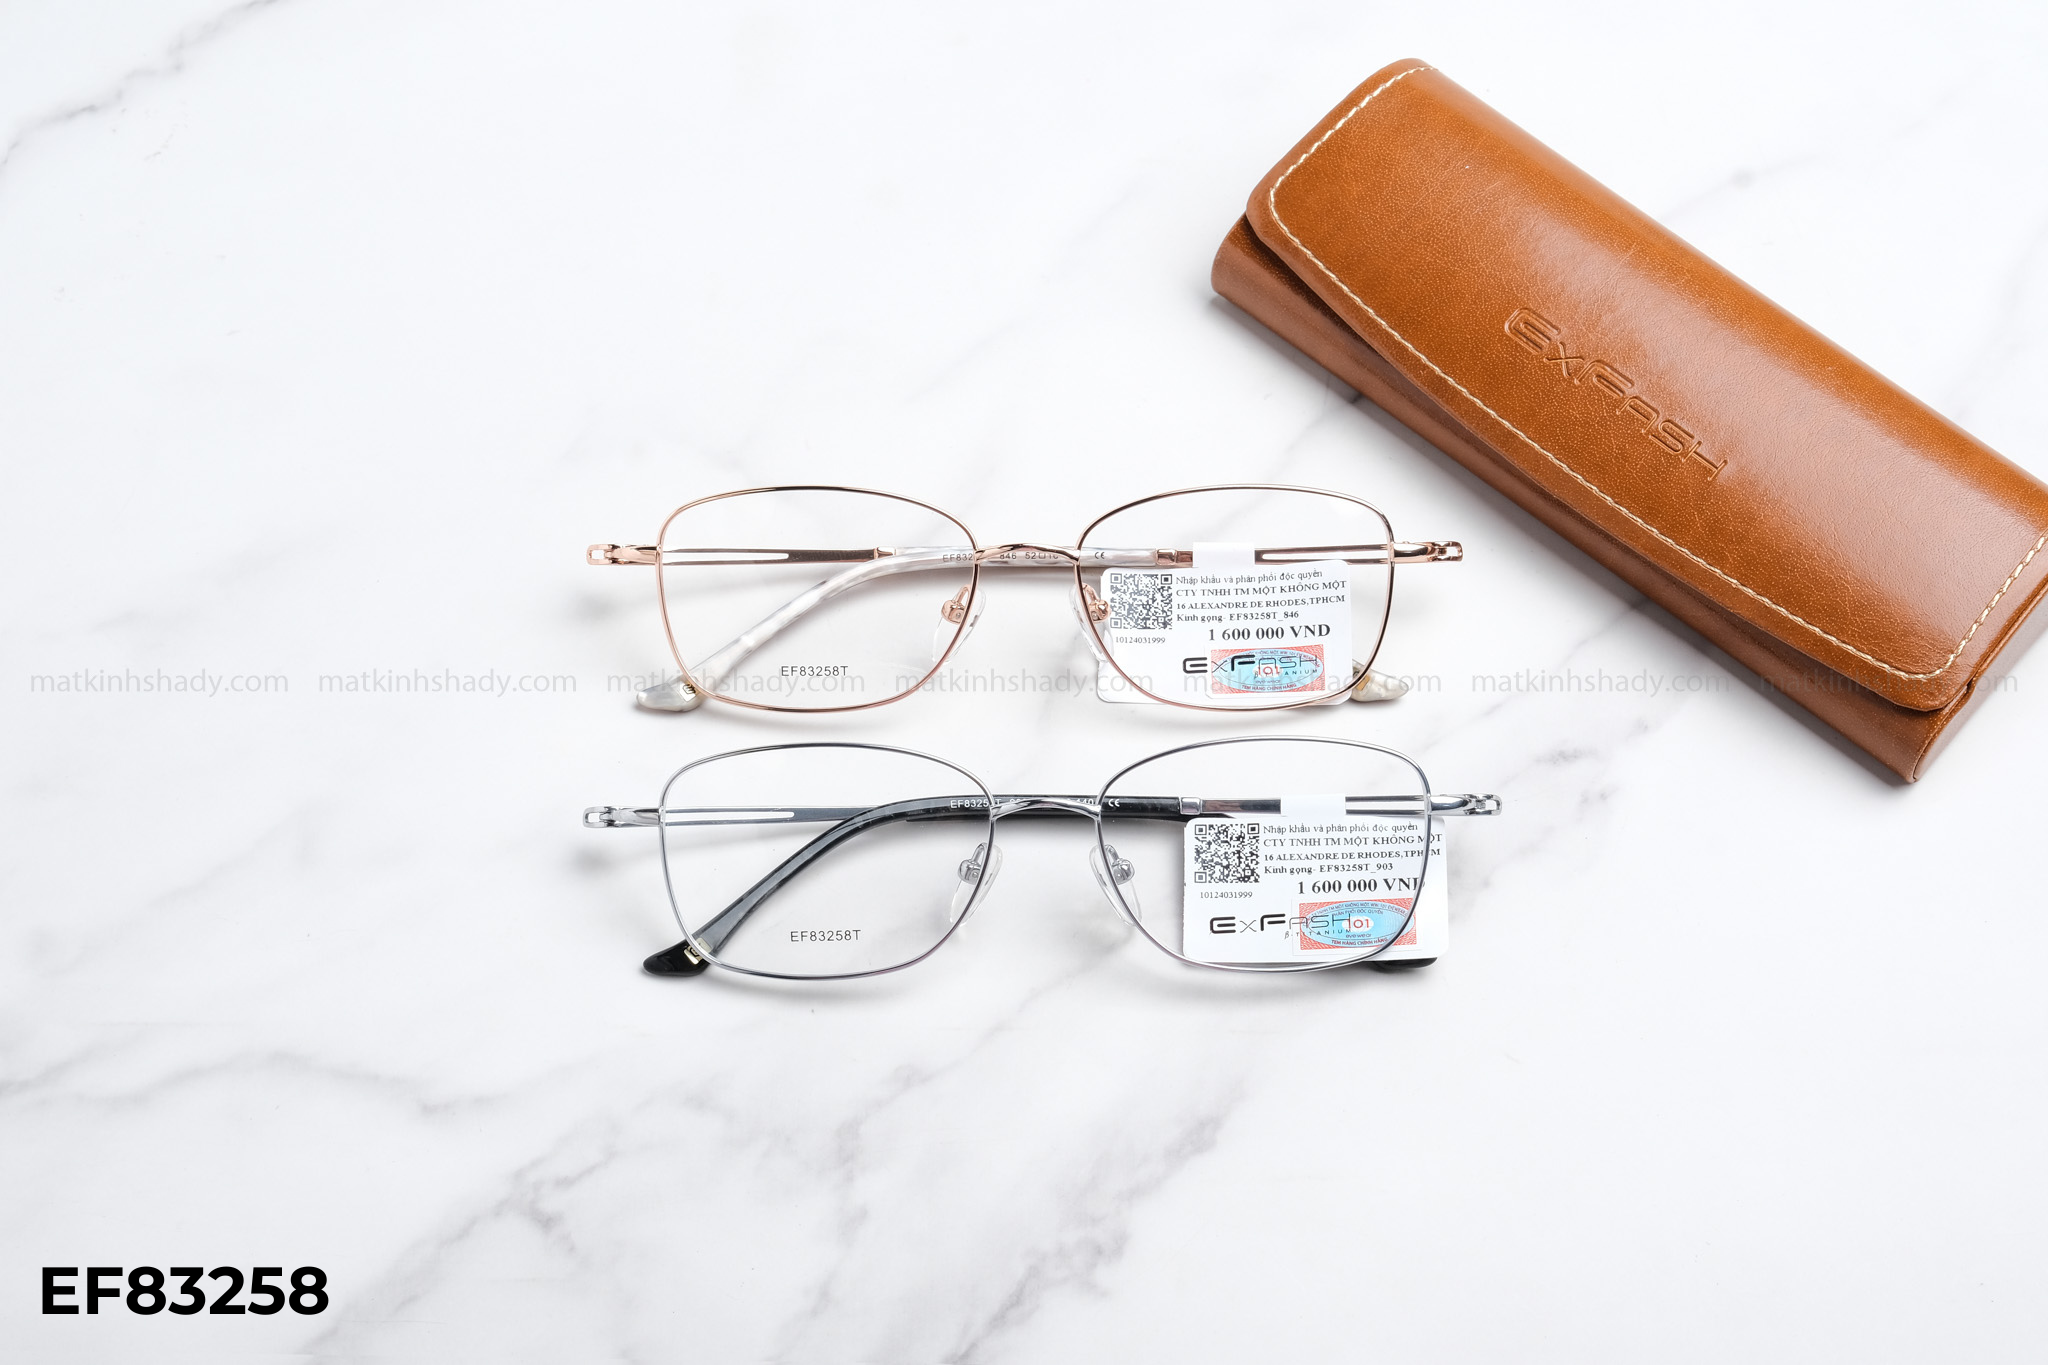  Exfash Eyewear - Glasses - EF83258 